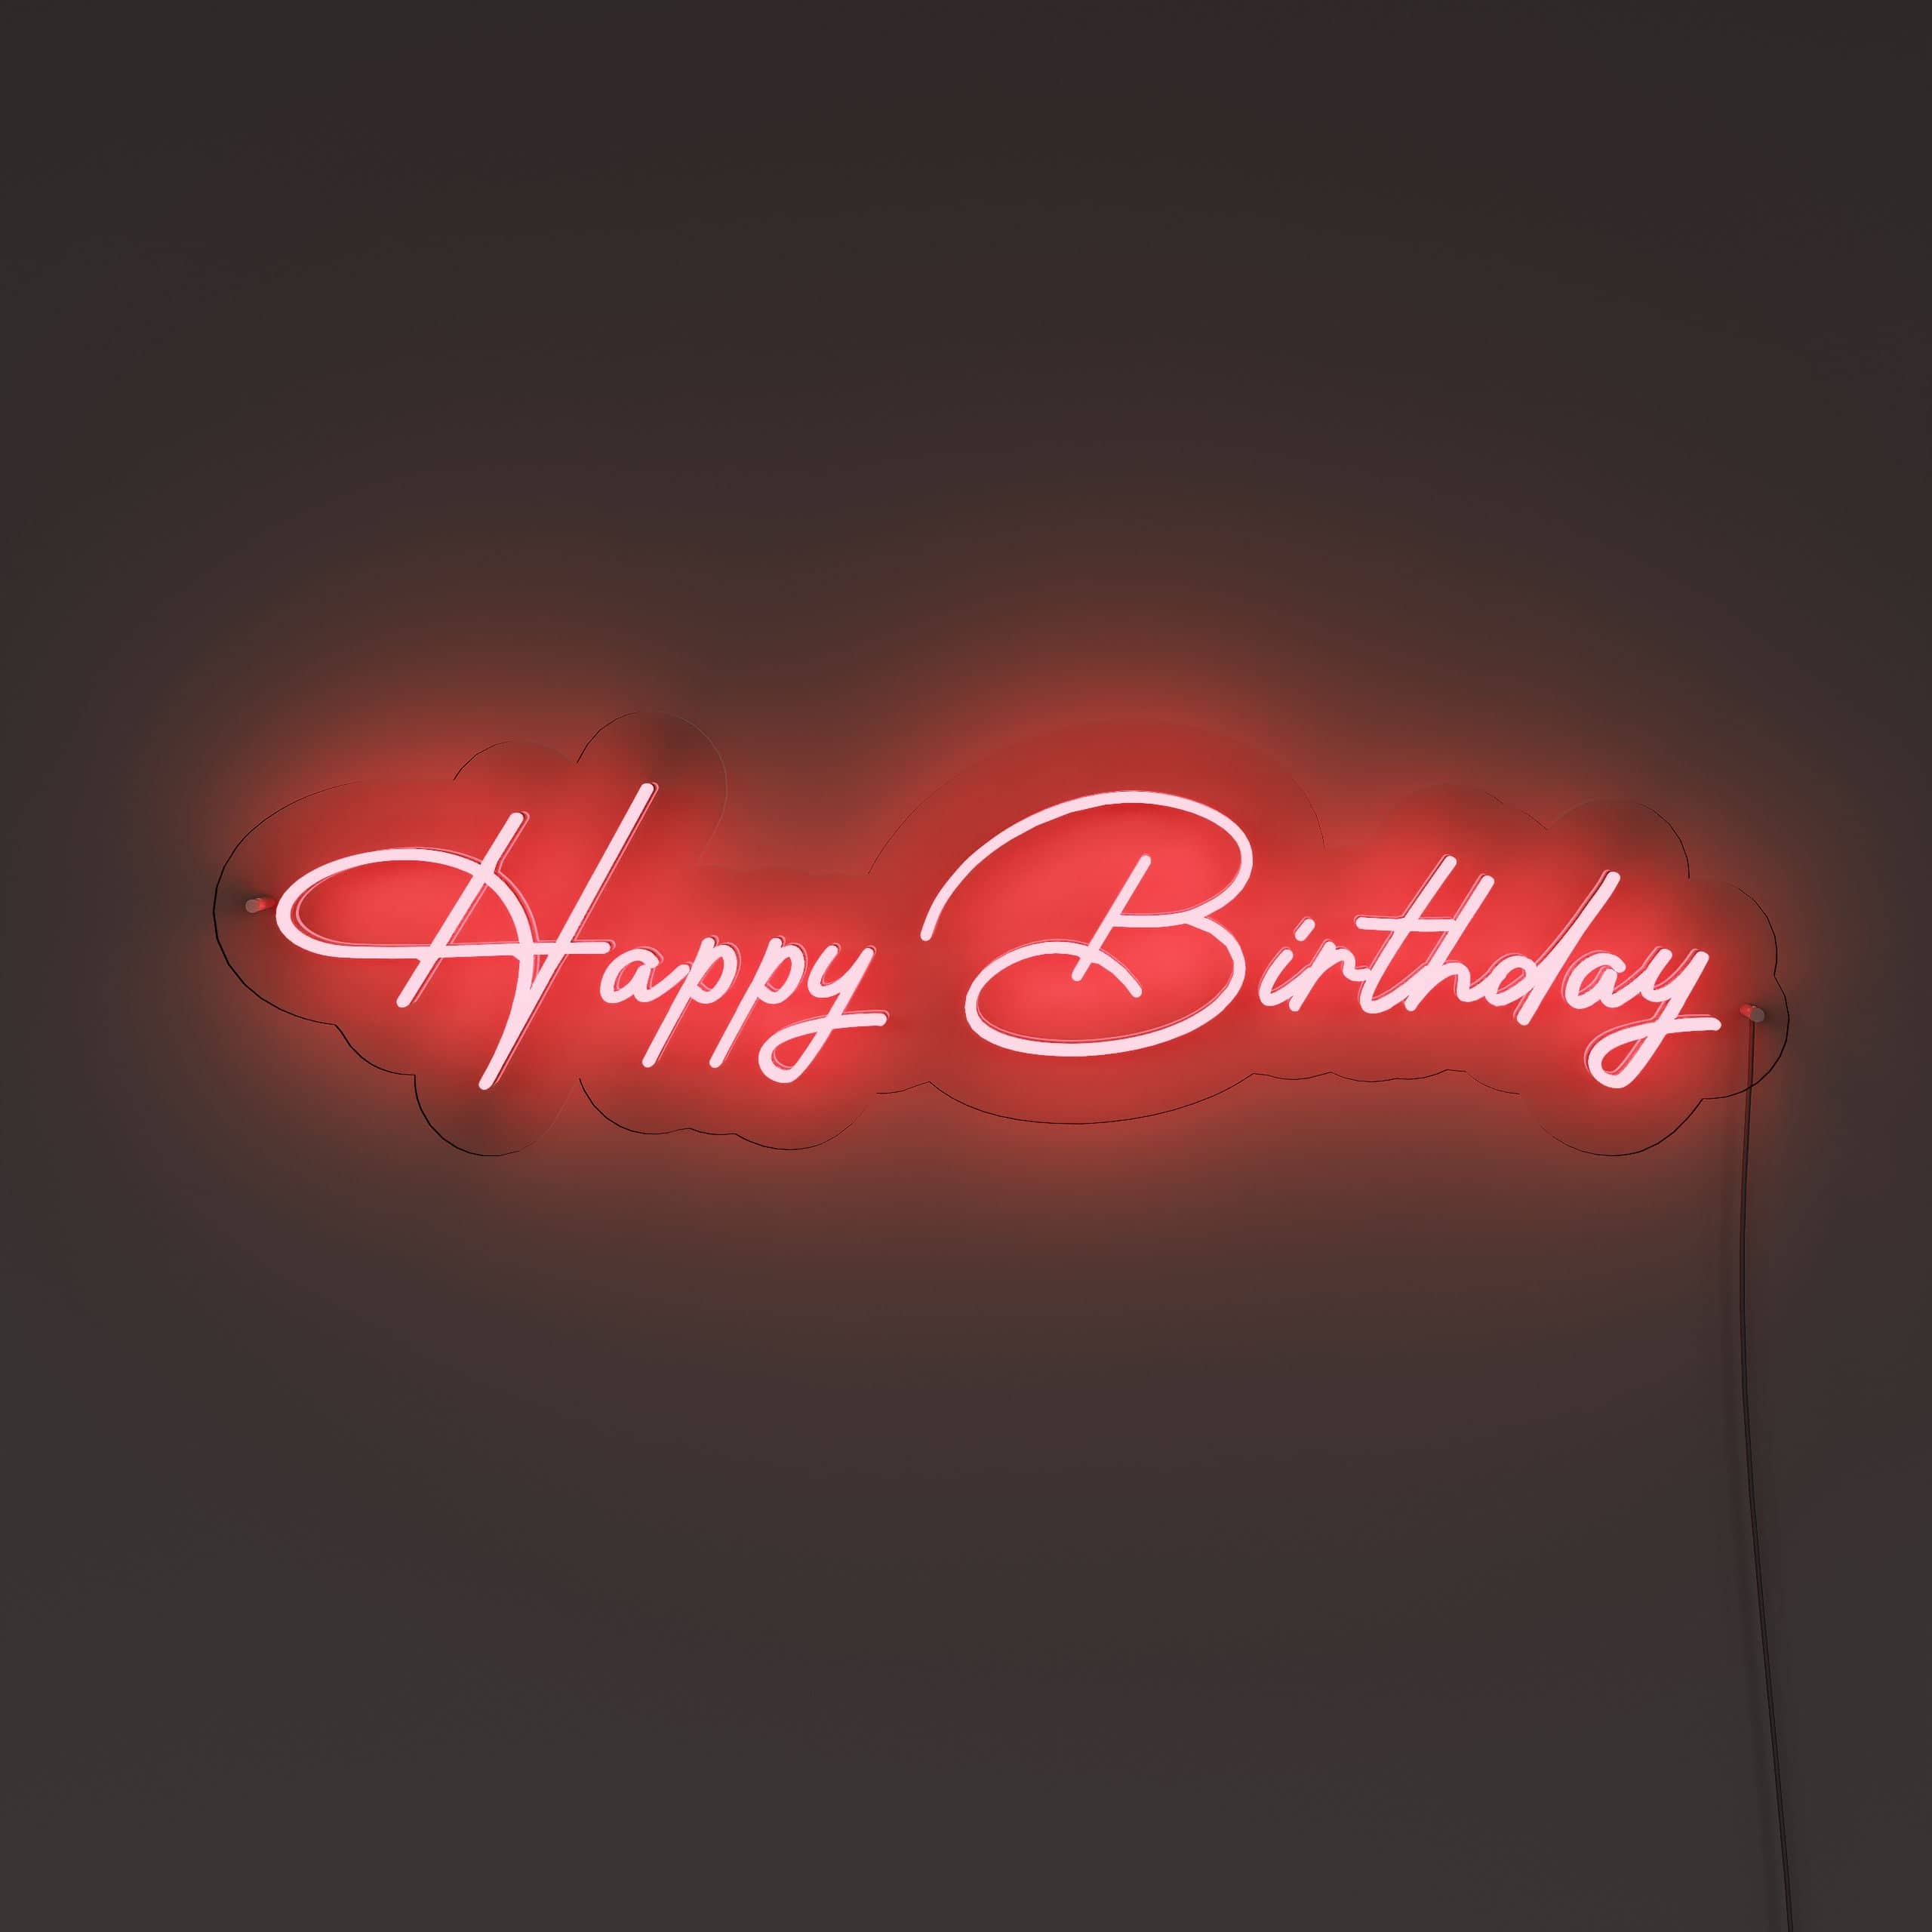 wishing-you-a-joyful-birthday!-neon-sign-lite